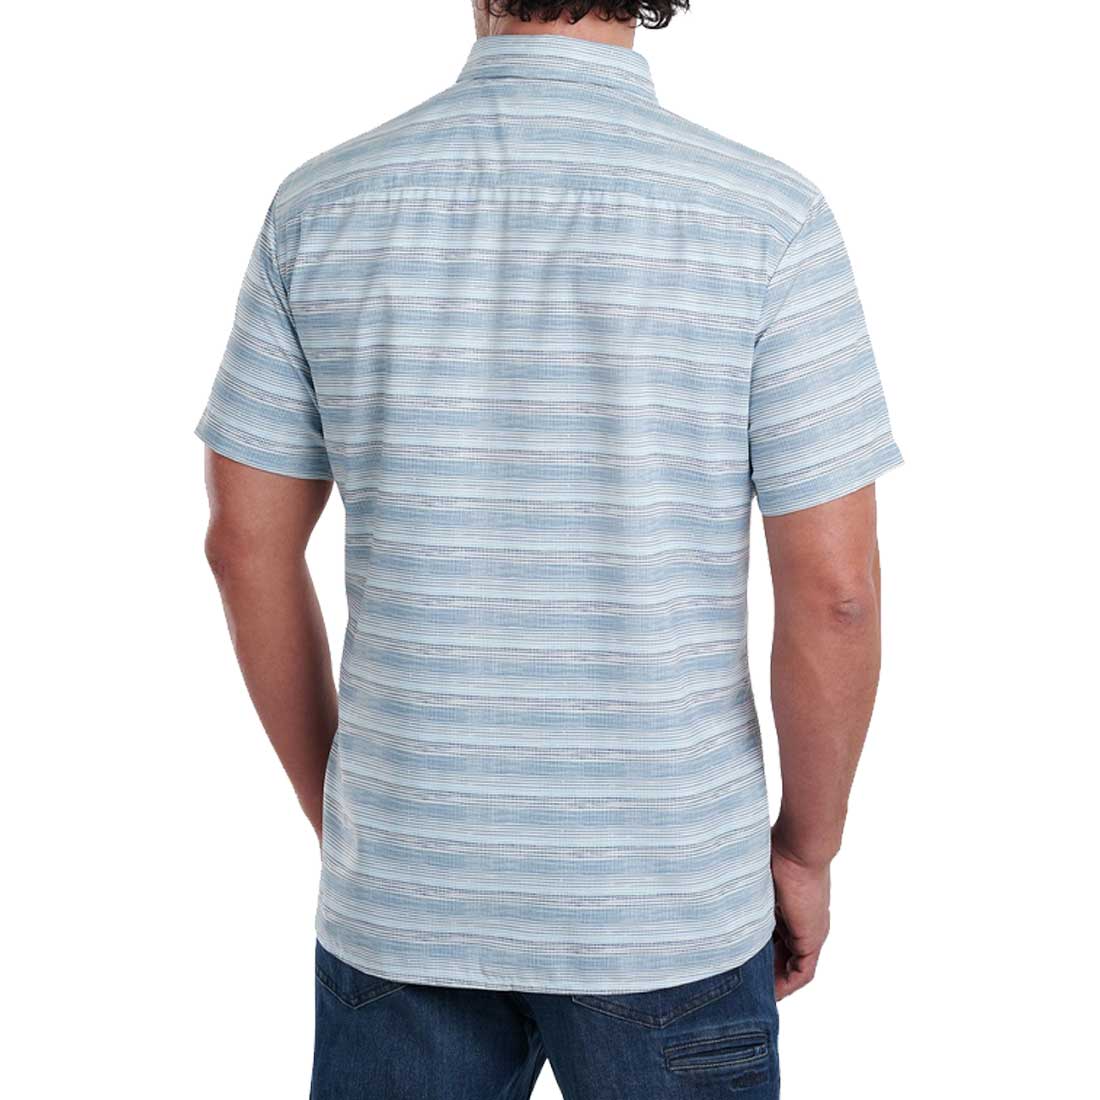 KUHL Persuadr Short Sleeve Shirt - Men's